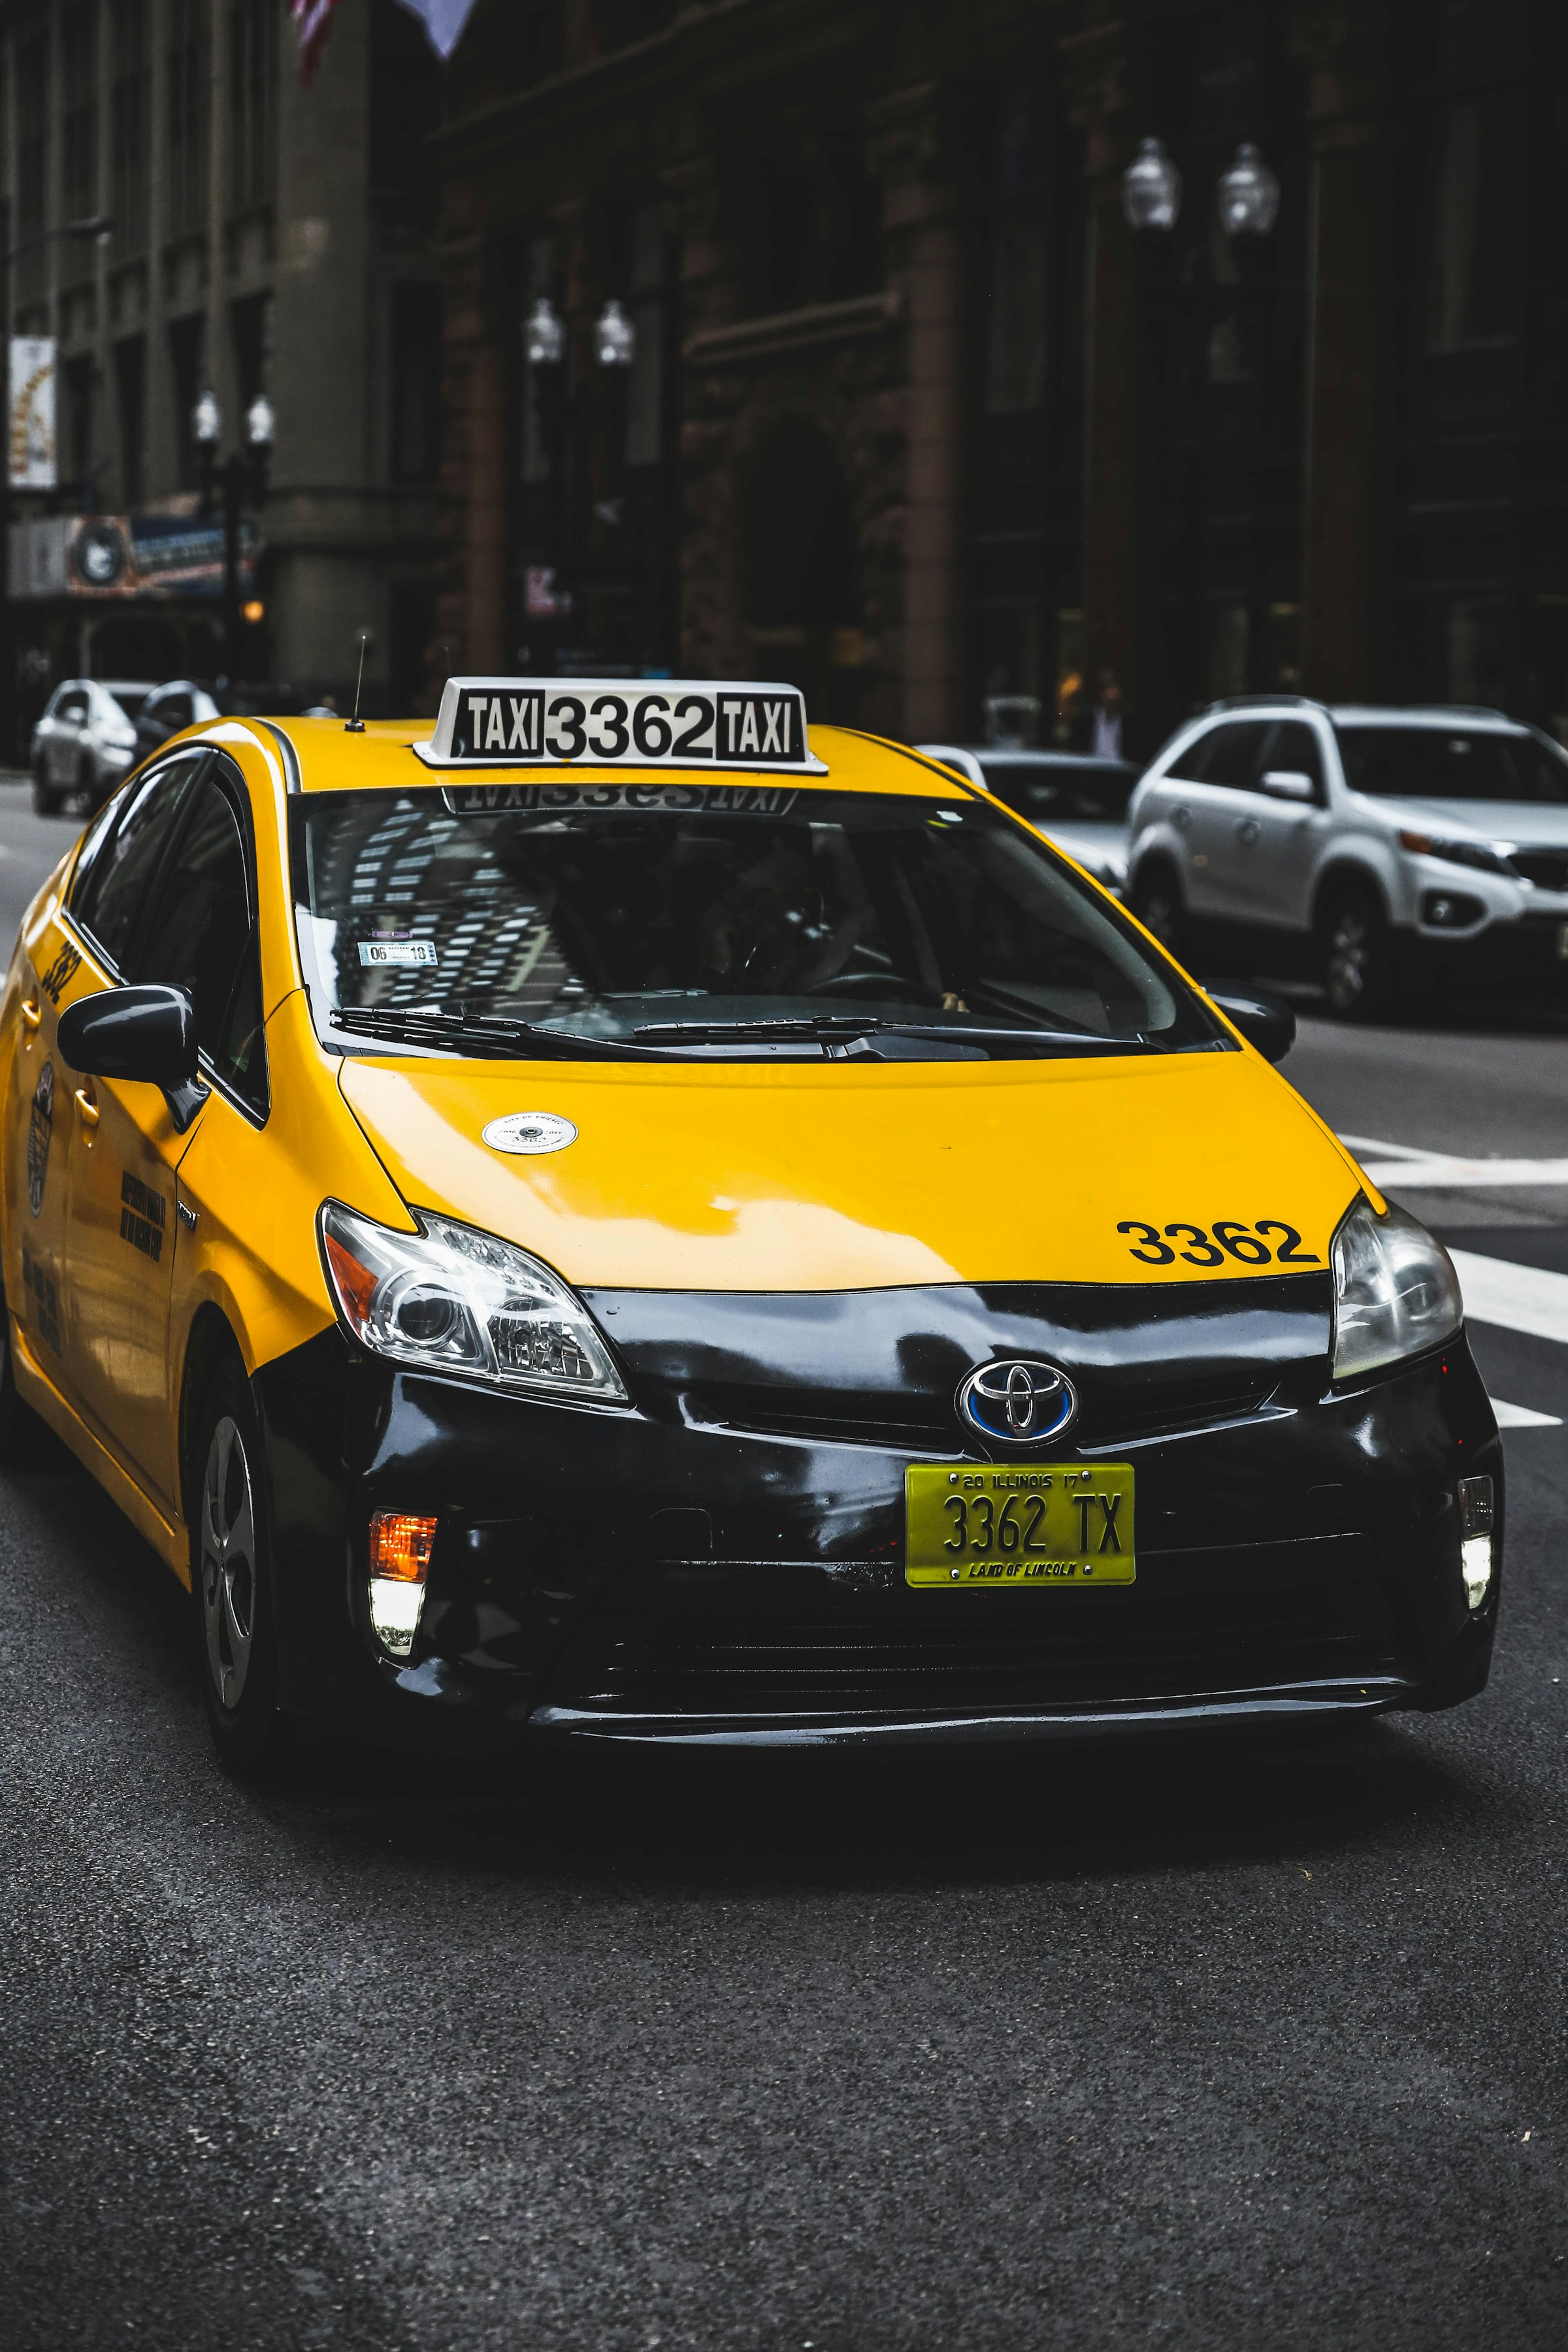 A yellow cab | Source: Unsplash